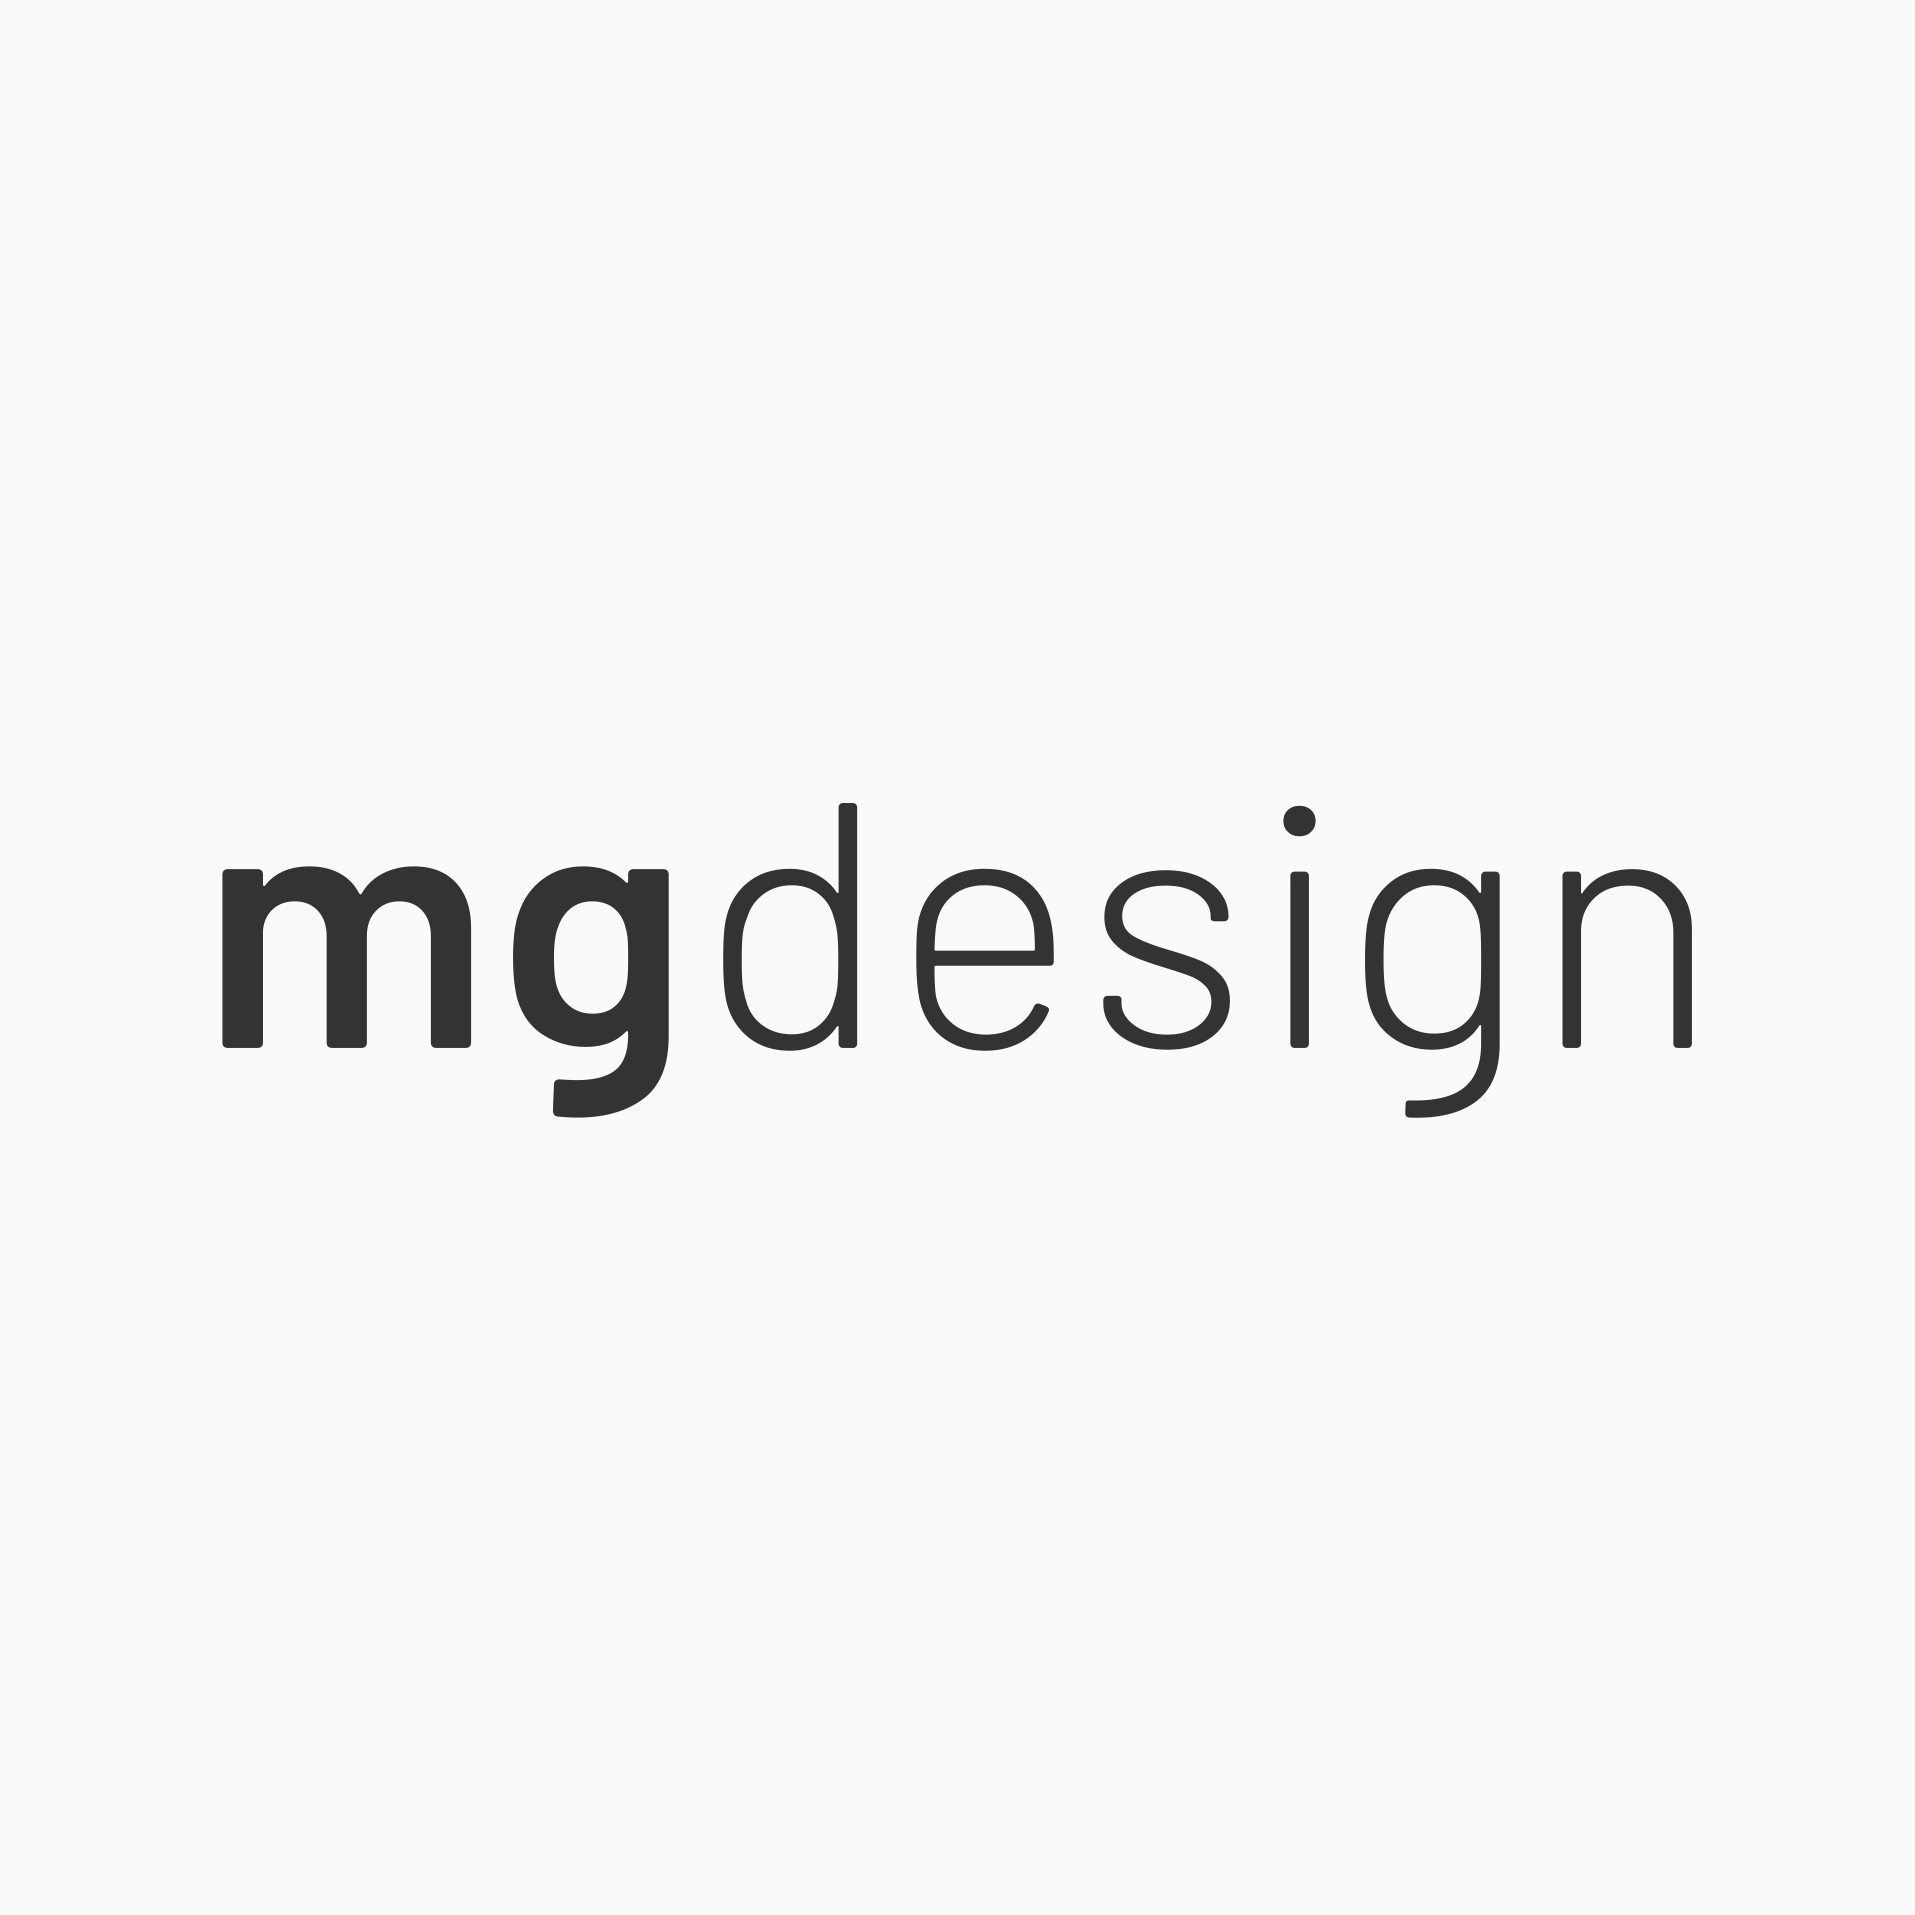 mgdesign